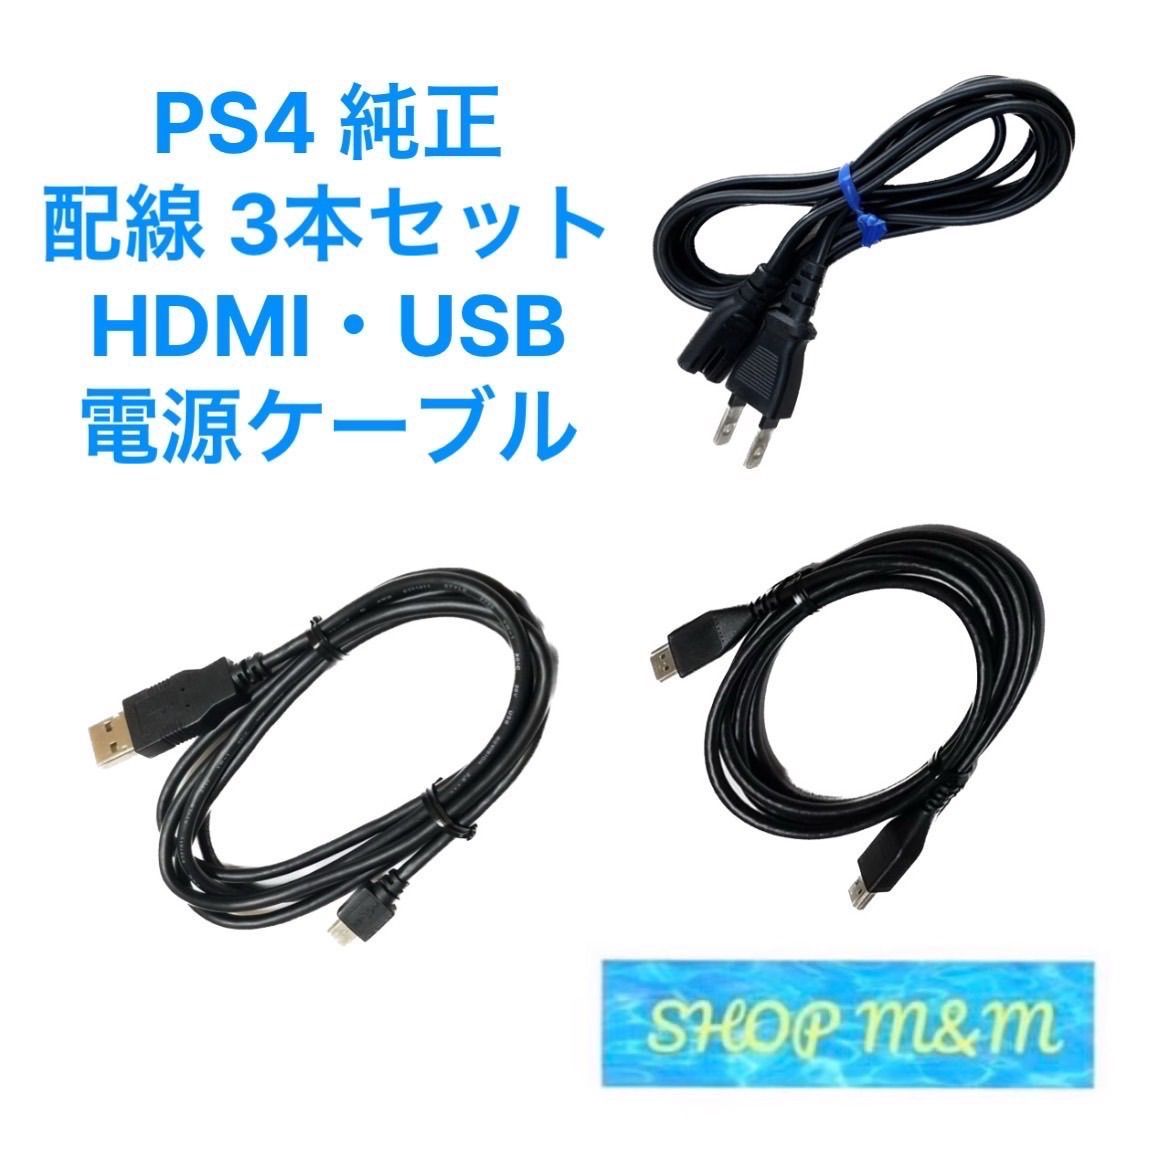 PS4 USBケーブル 電源コード HDMIケーブル 純正 付属品 SONY